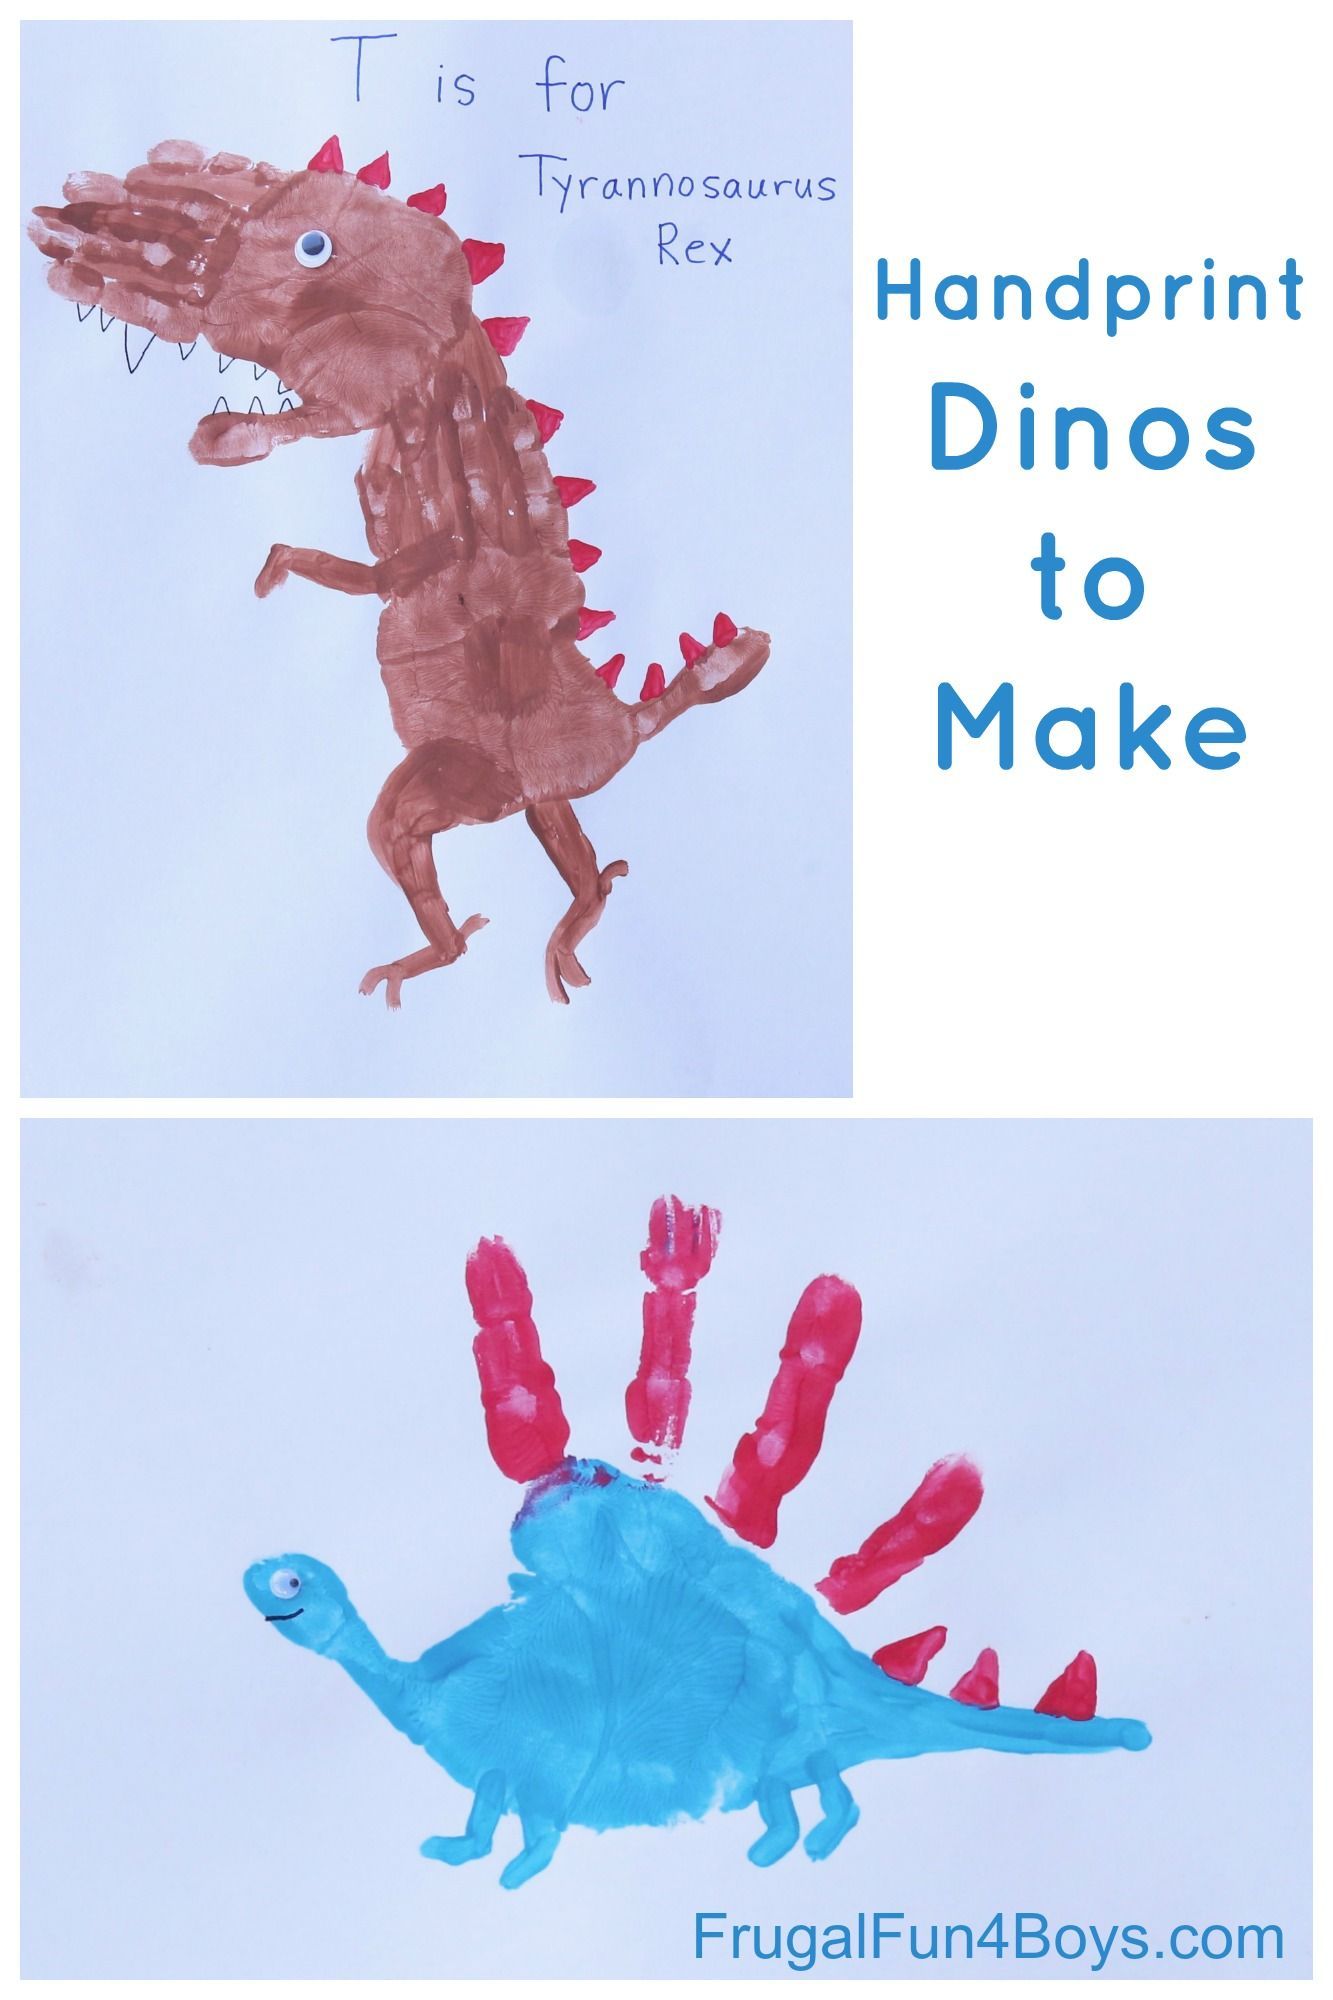 Fun dinosaur craft for kids – handprint dinosaurs to make! T-Rex, Stegosaurus, and Brachiosaurus